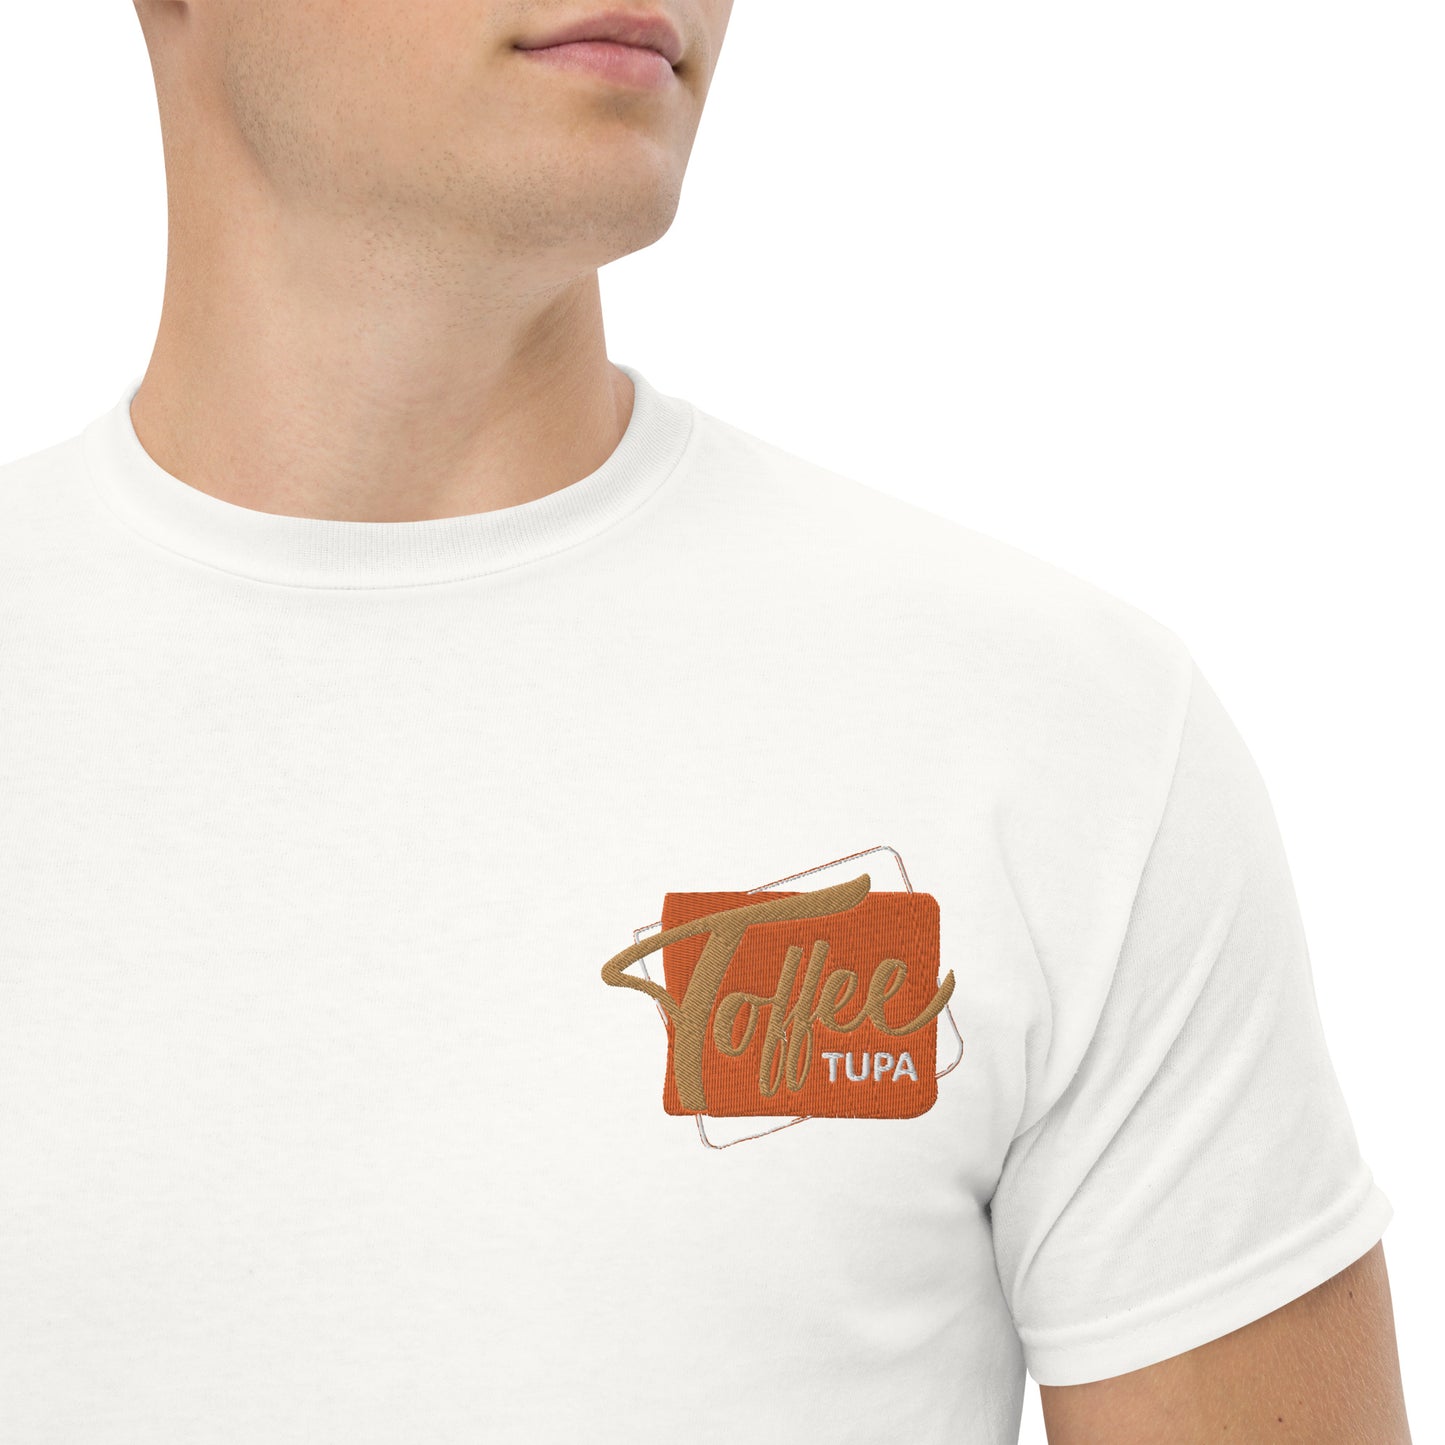 "Toffeetupa" classic t-paita, brodeeraus + printtaus